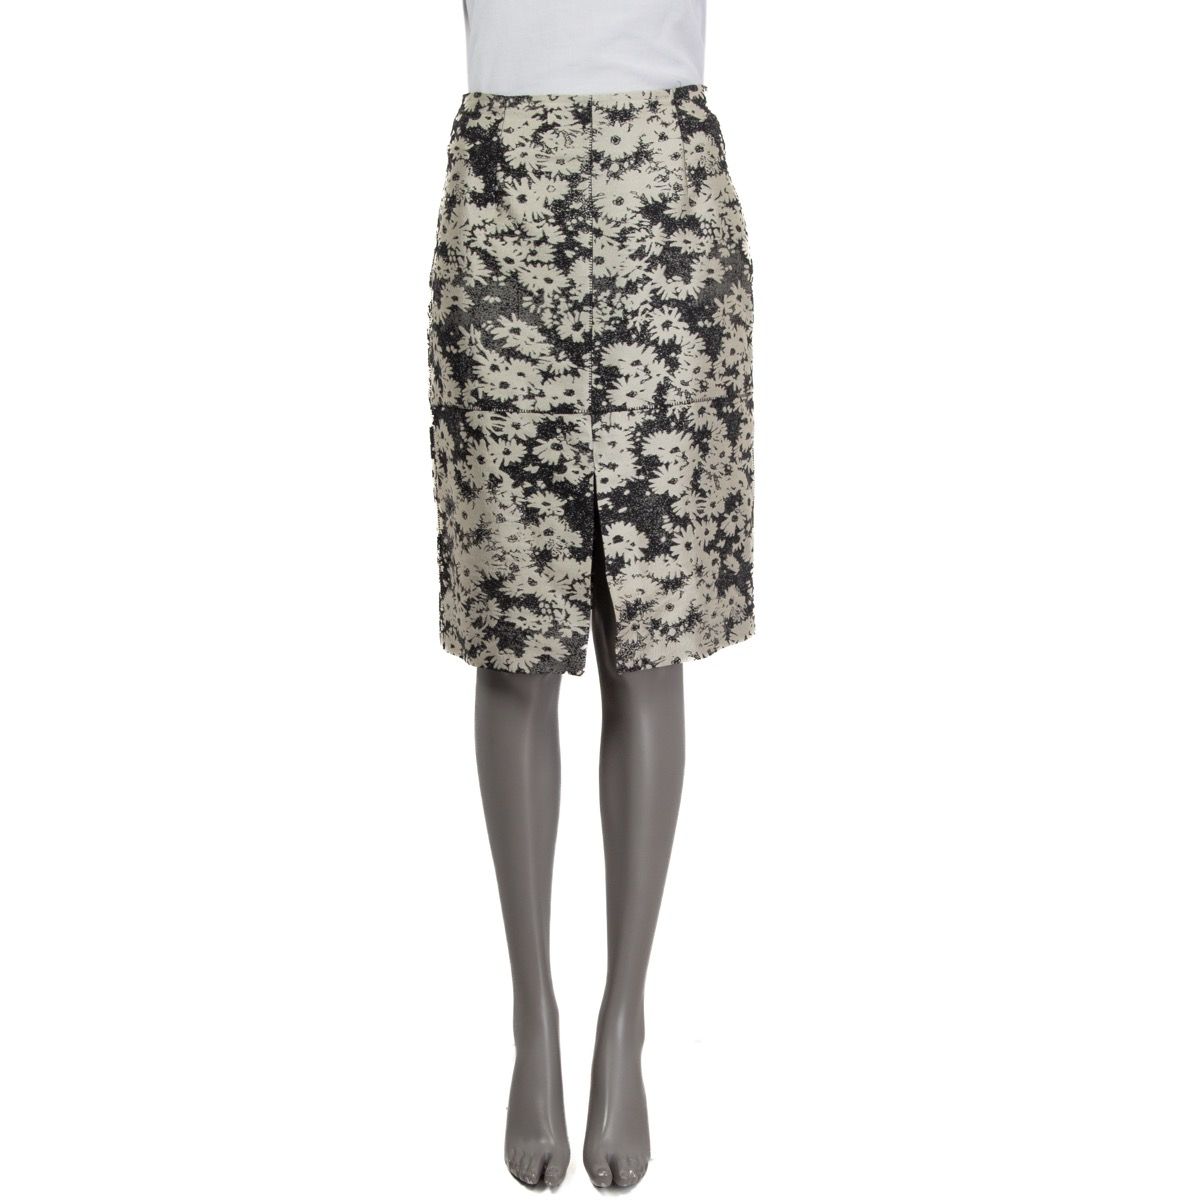 Stella McCartney Jacquard Floral Kne-Length Skirt